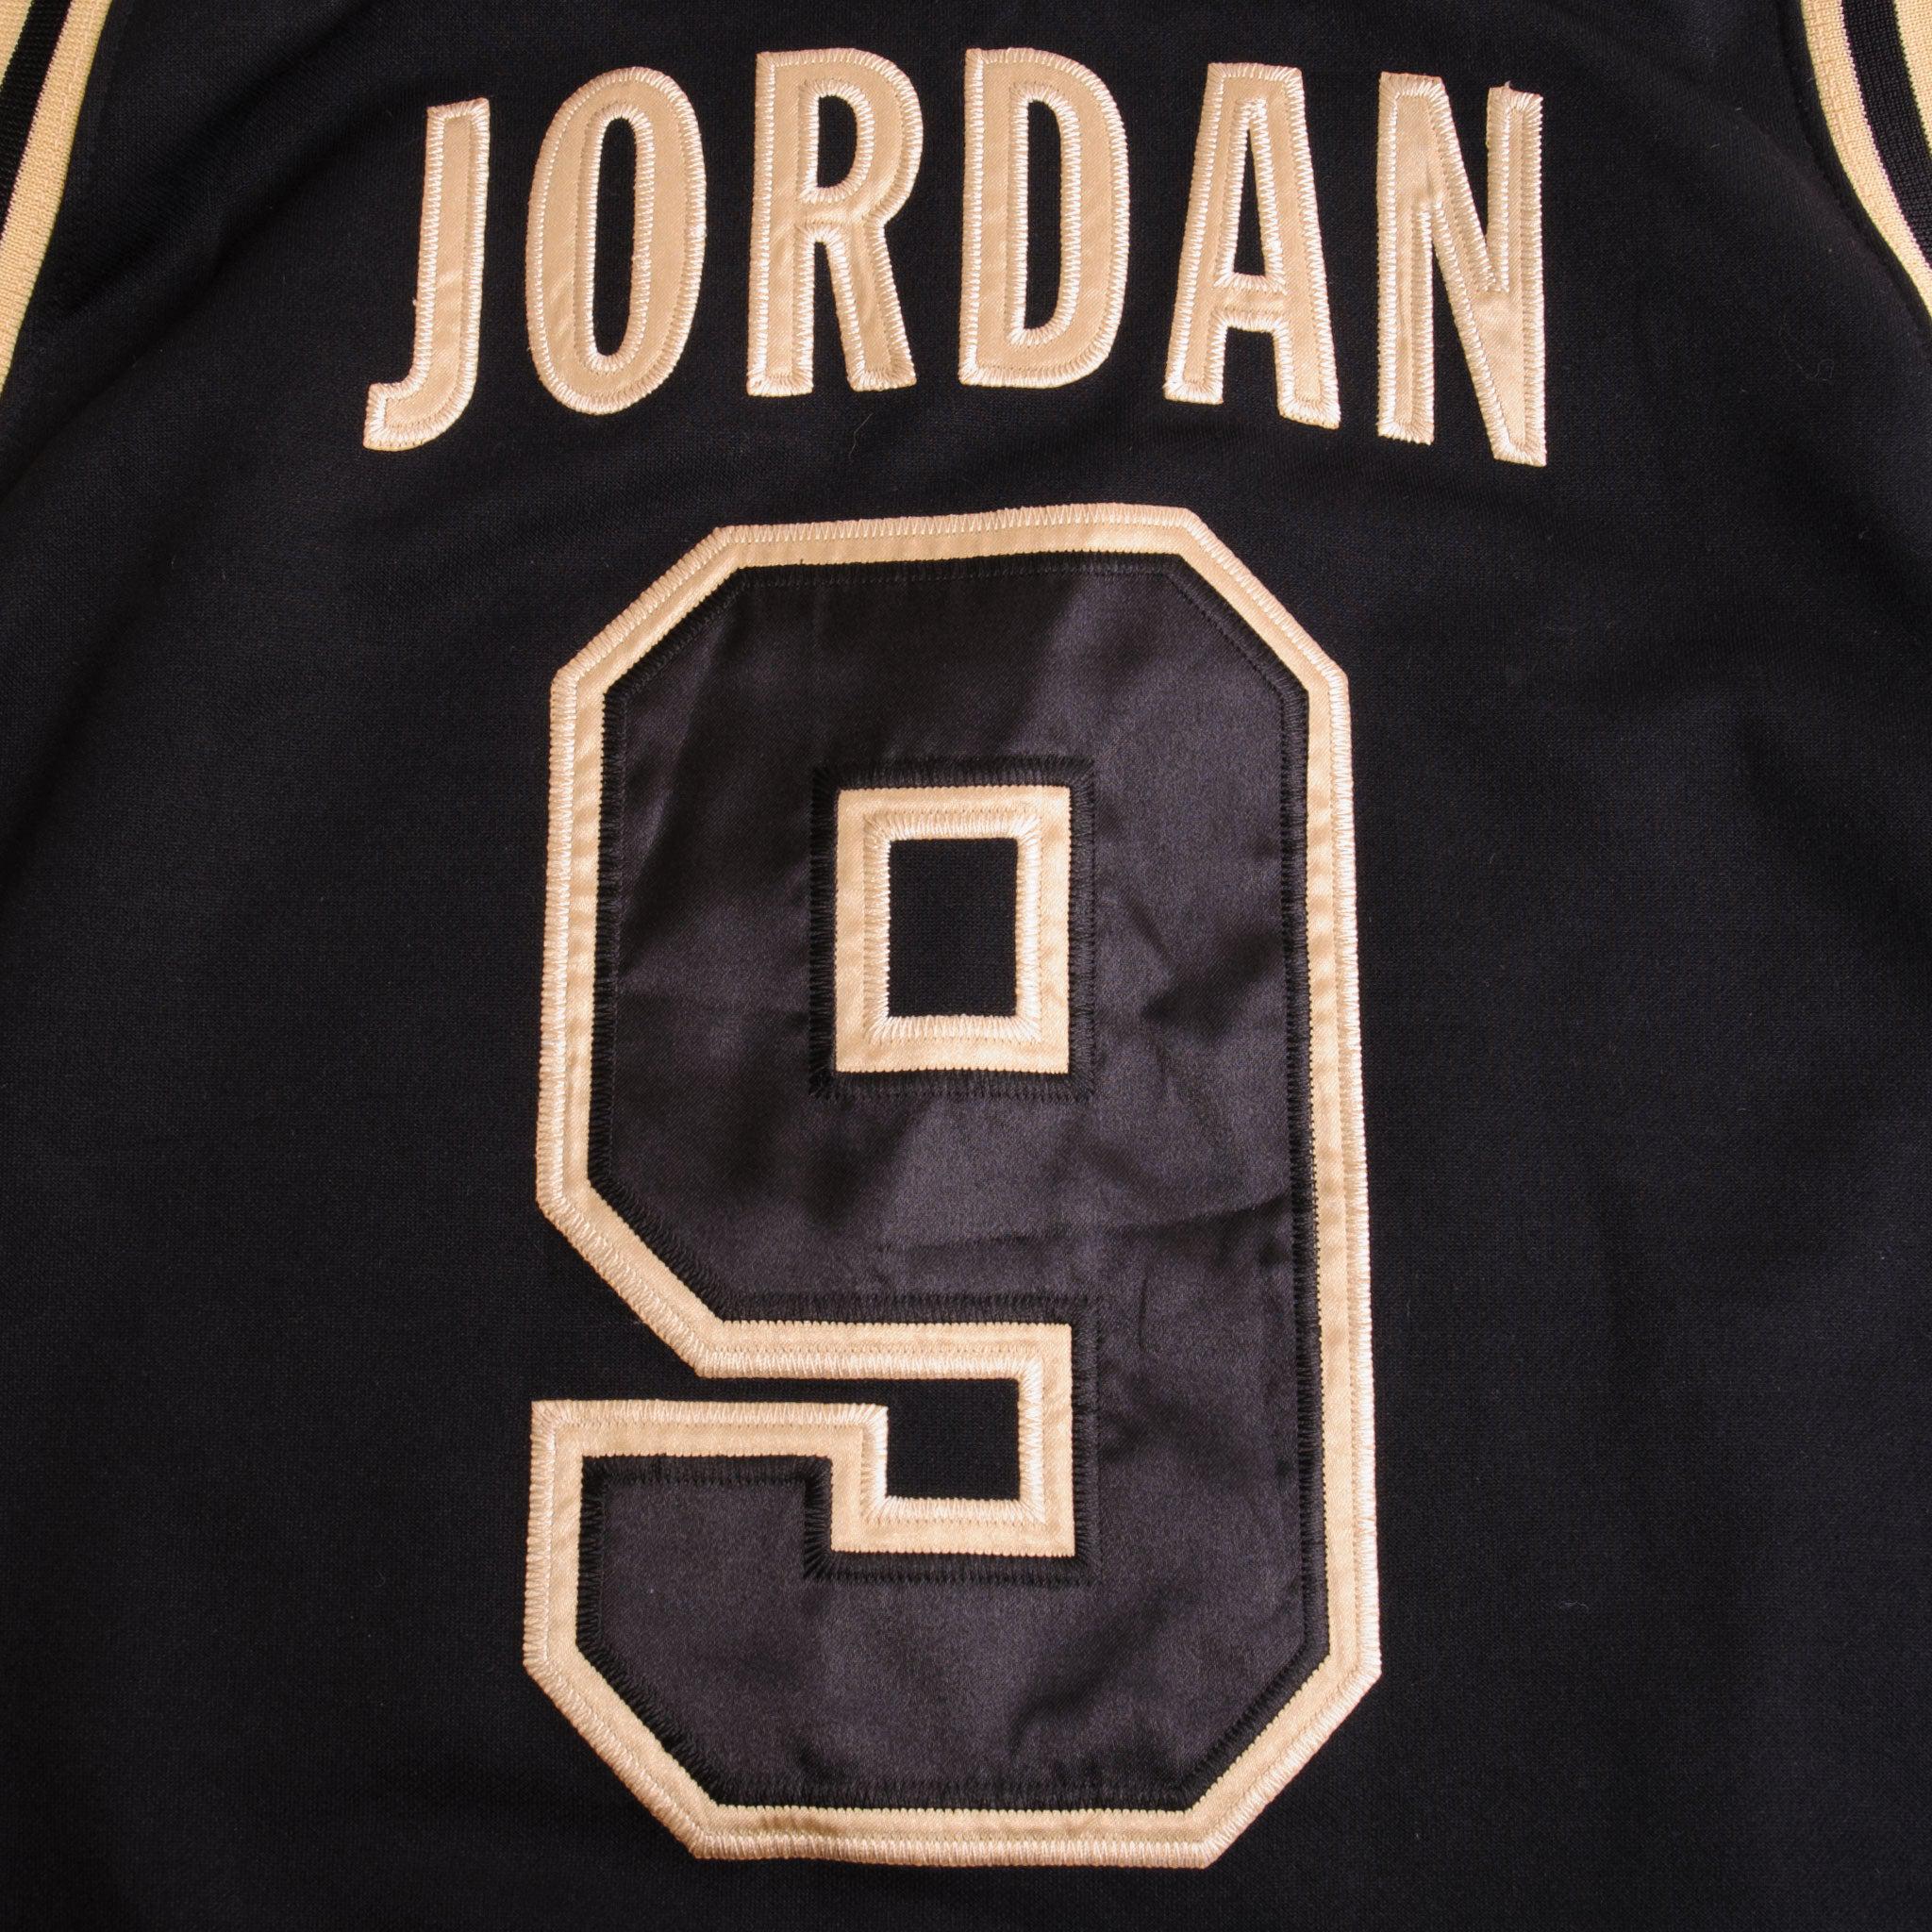 Rare Nike Vintage Team USA Olympics Dream Team Michael Jordan Jersey -  Large for Sale in Arlington, VA - OfferUp